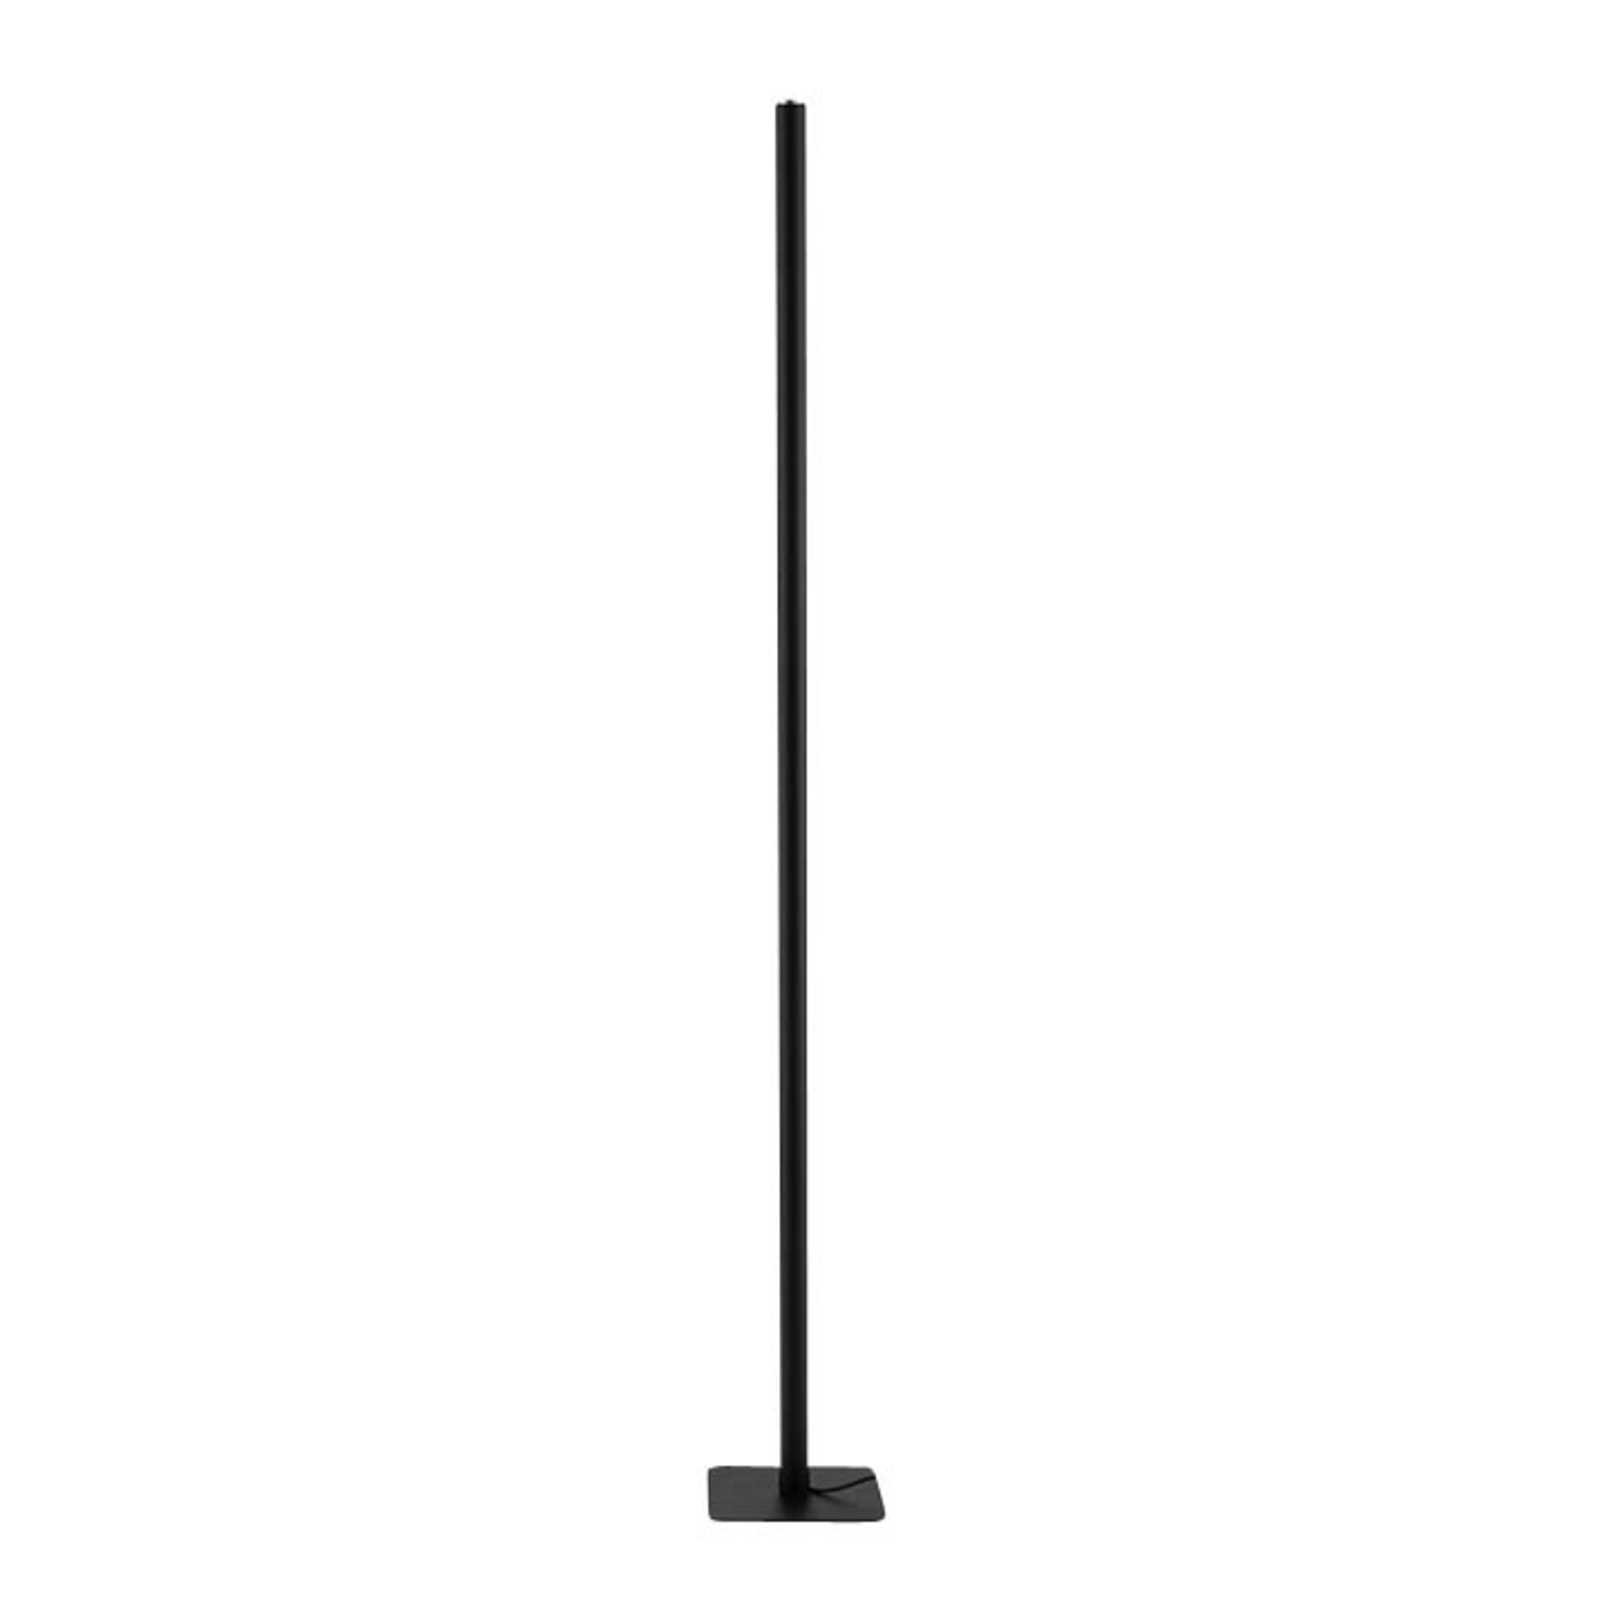 Artemide Ilio mini floor lamp app black 3,000 K